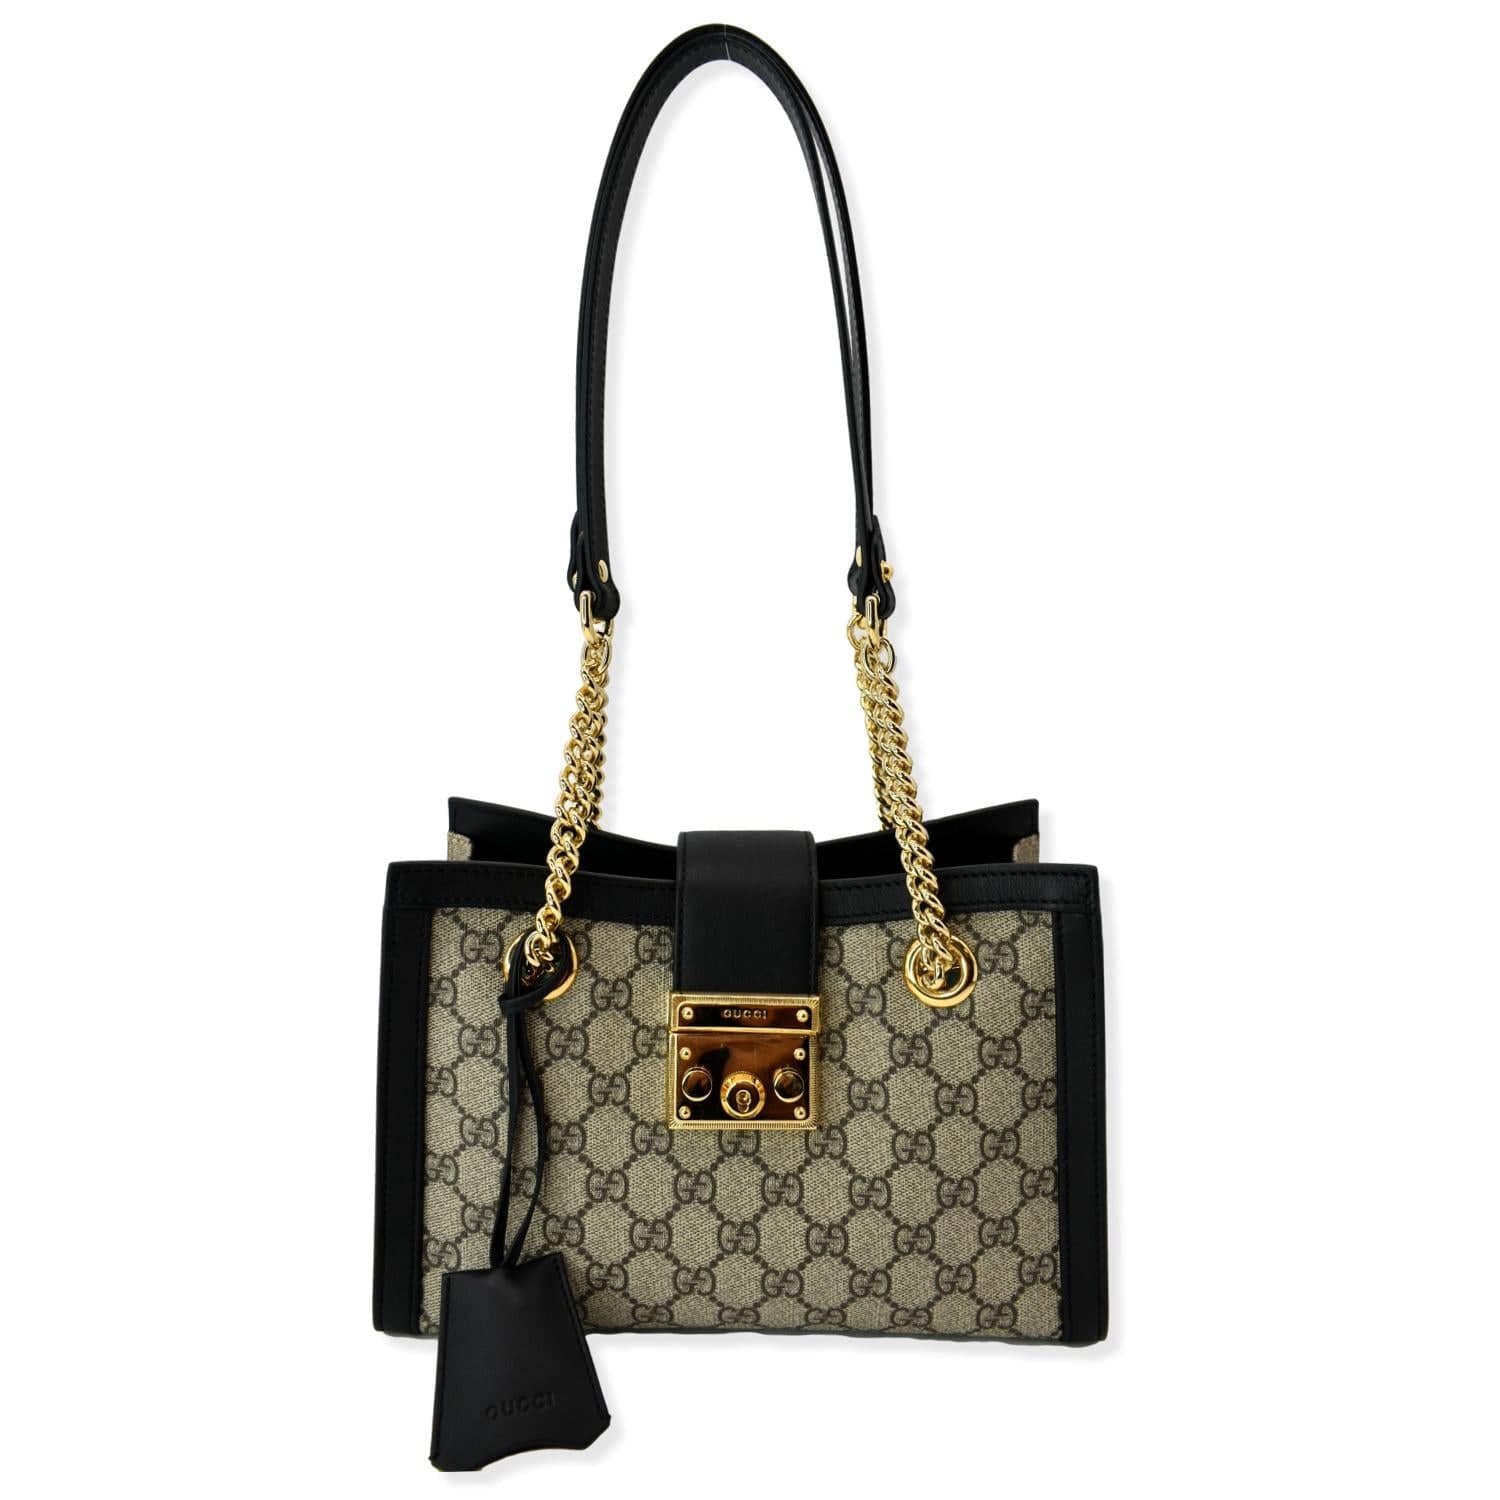 Gucci Messenger Bag GG Supreme Canvas Beige/Ebony